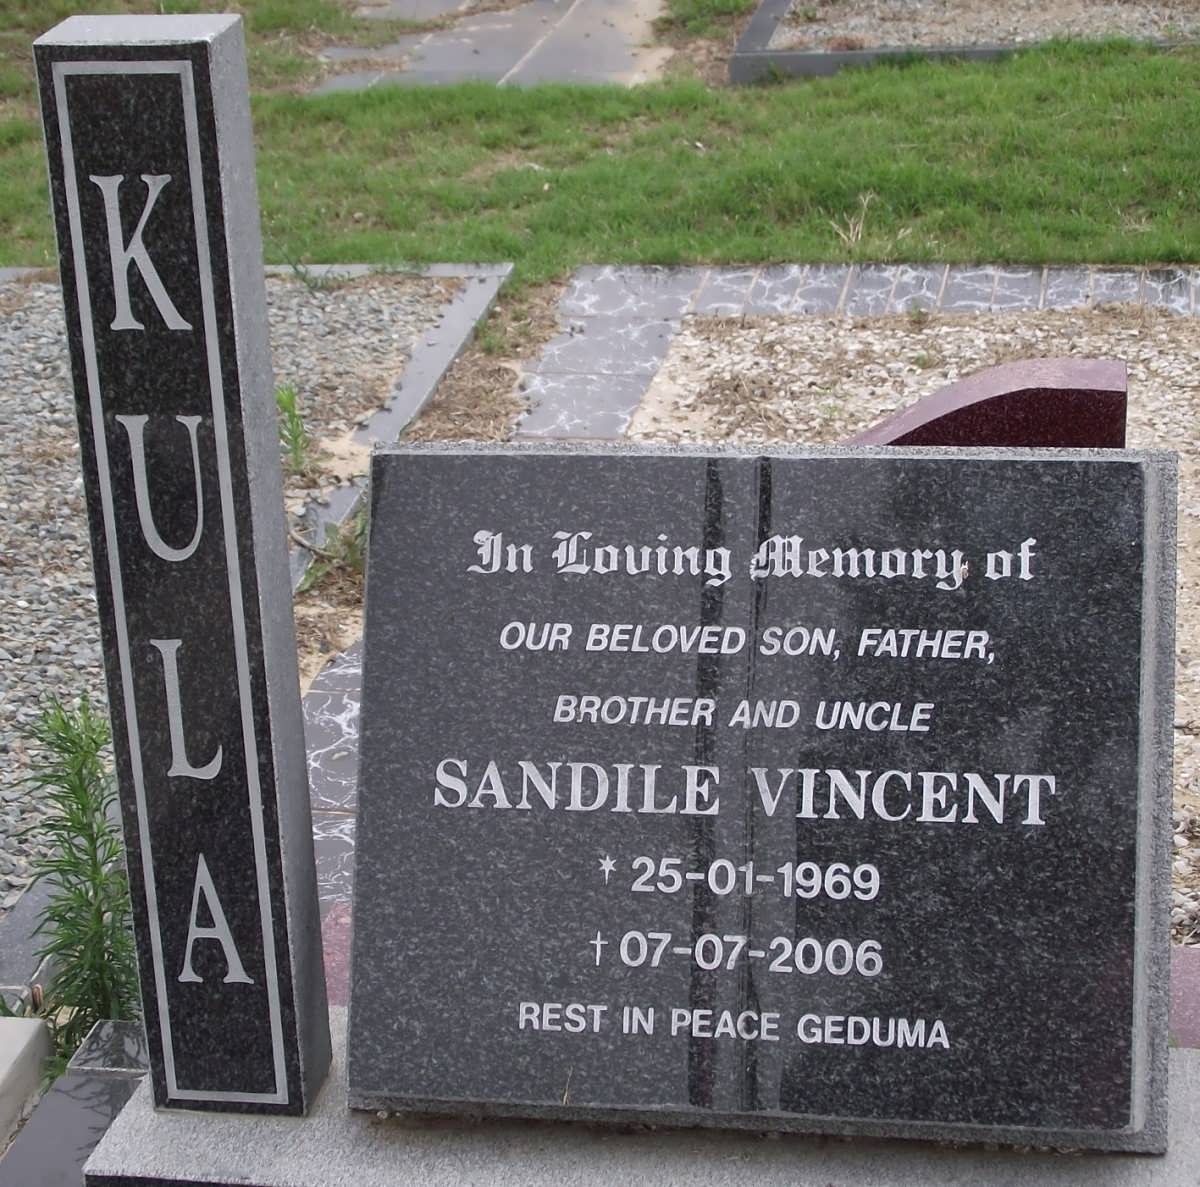 KULA Sandile Vincent 1969-2006